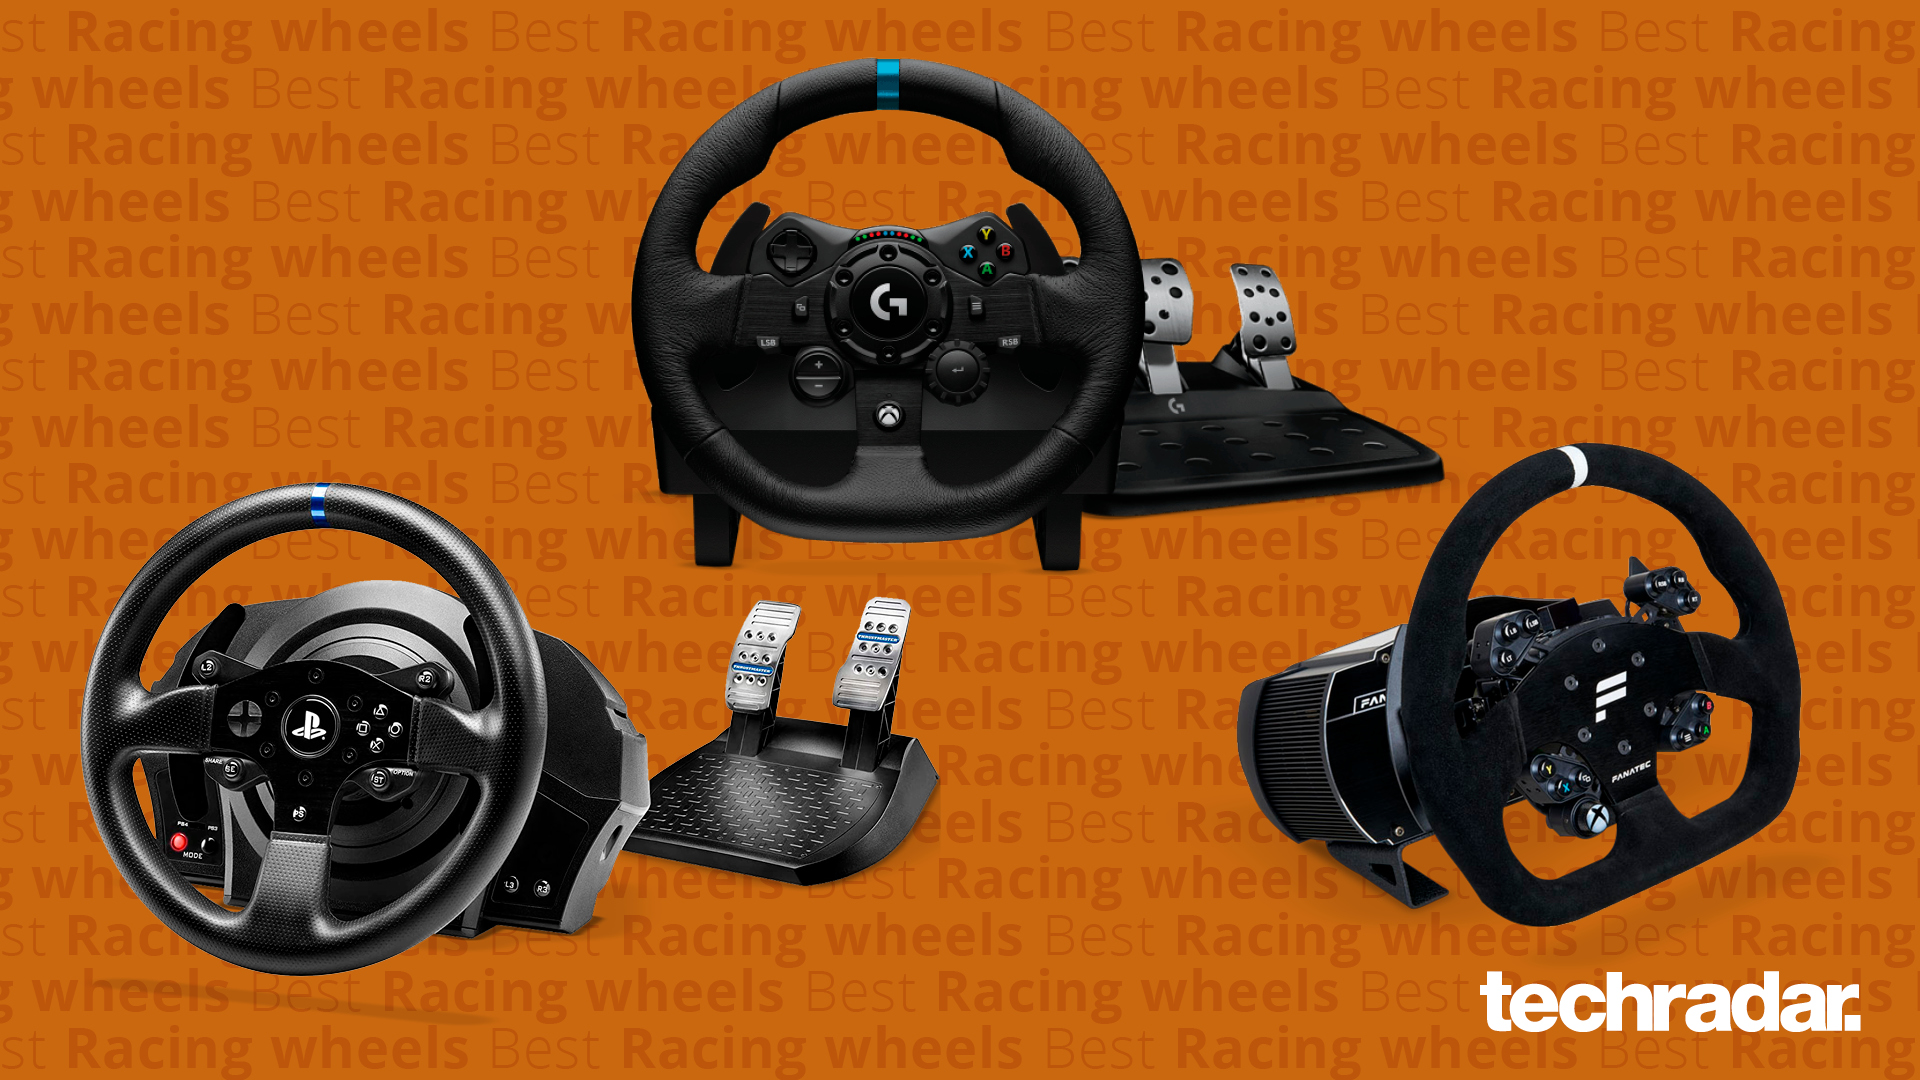 bureau dette blande Best racing wheels | TechRadar